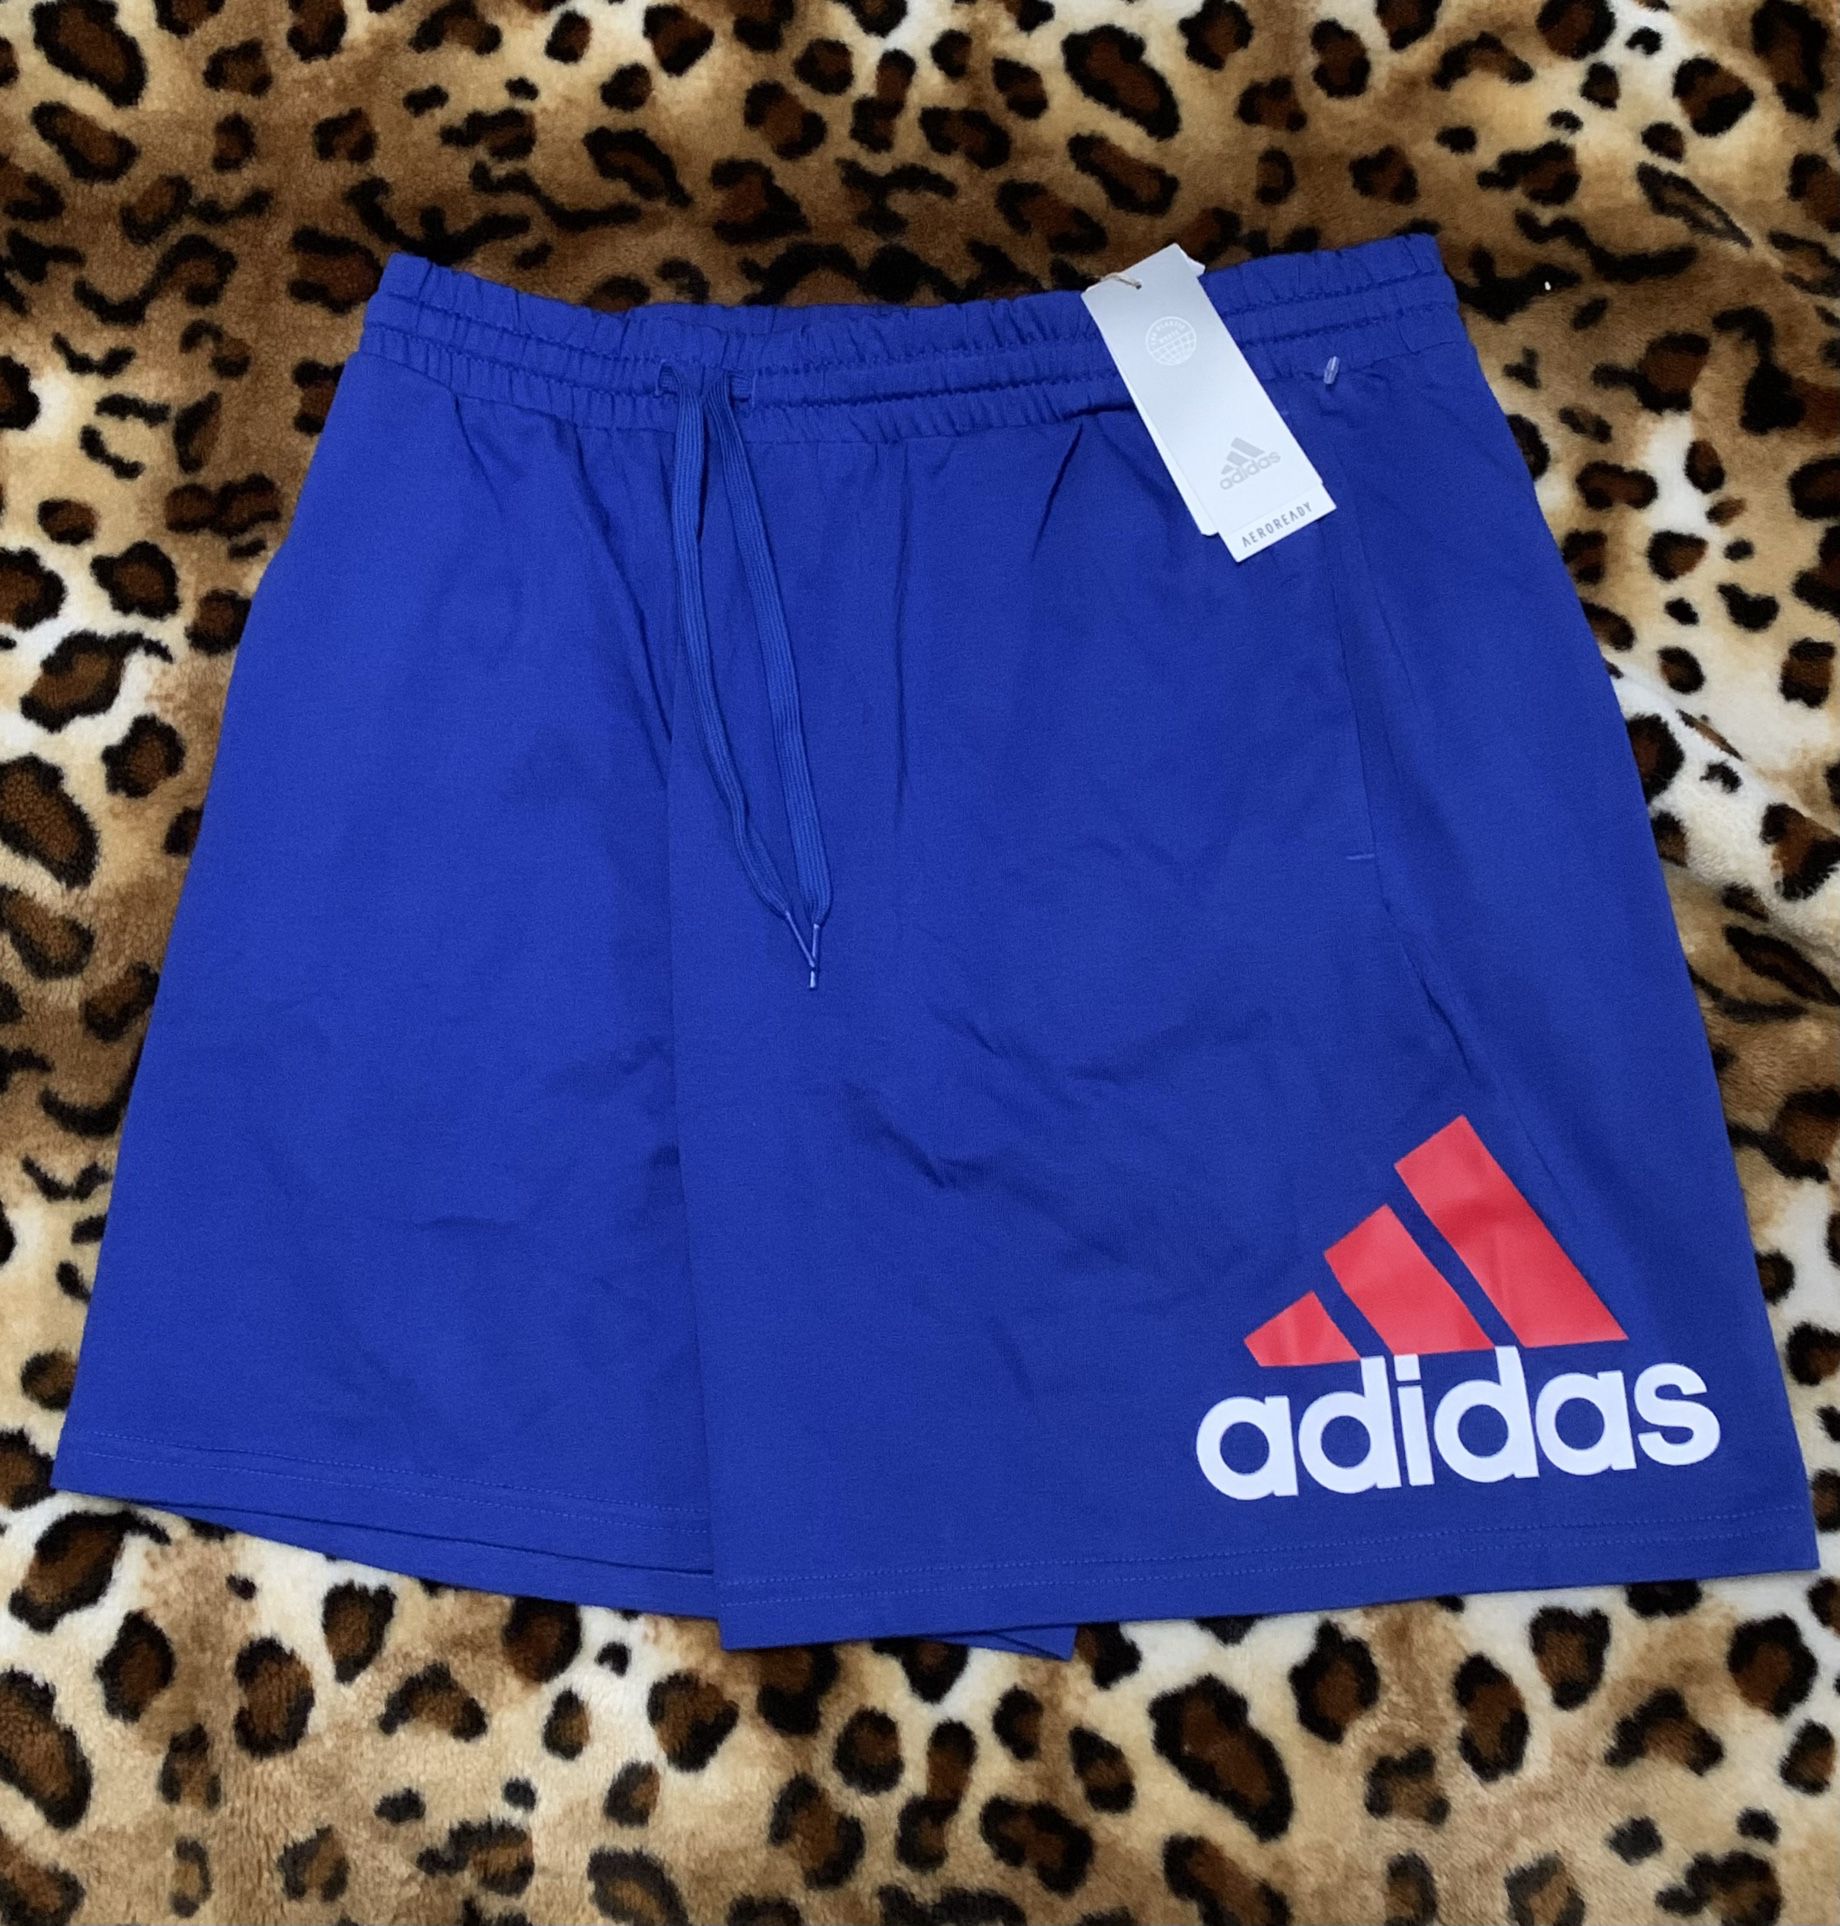 Adidas Aeroready  Shorts Men’s Large Blue New 